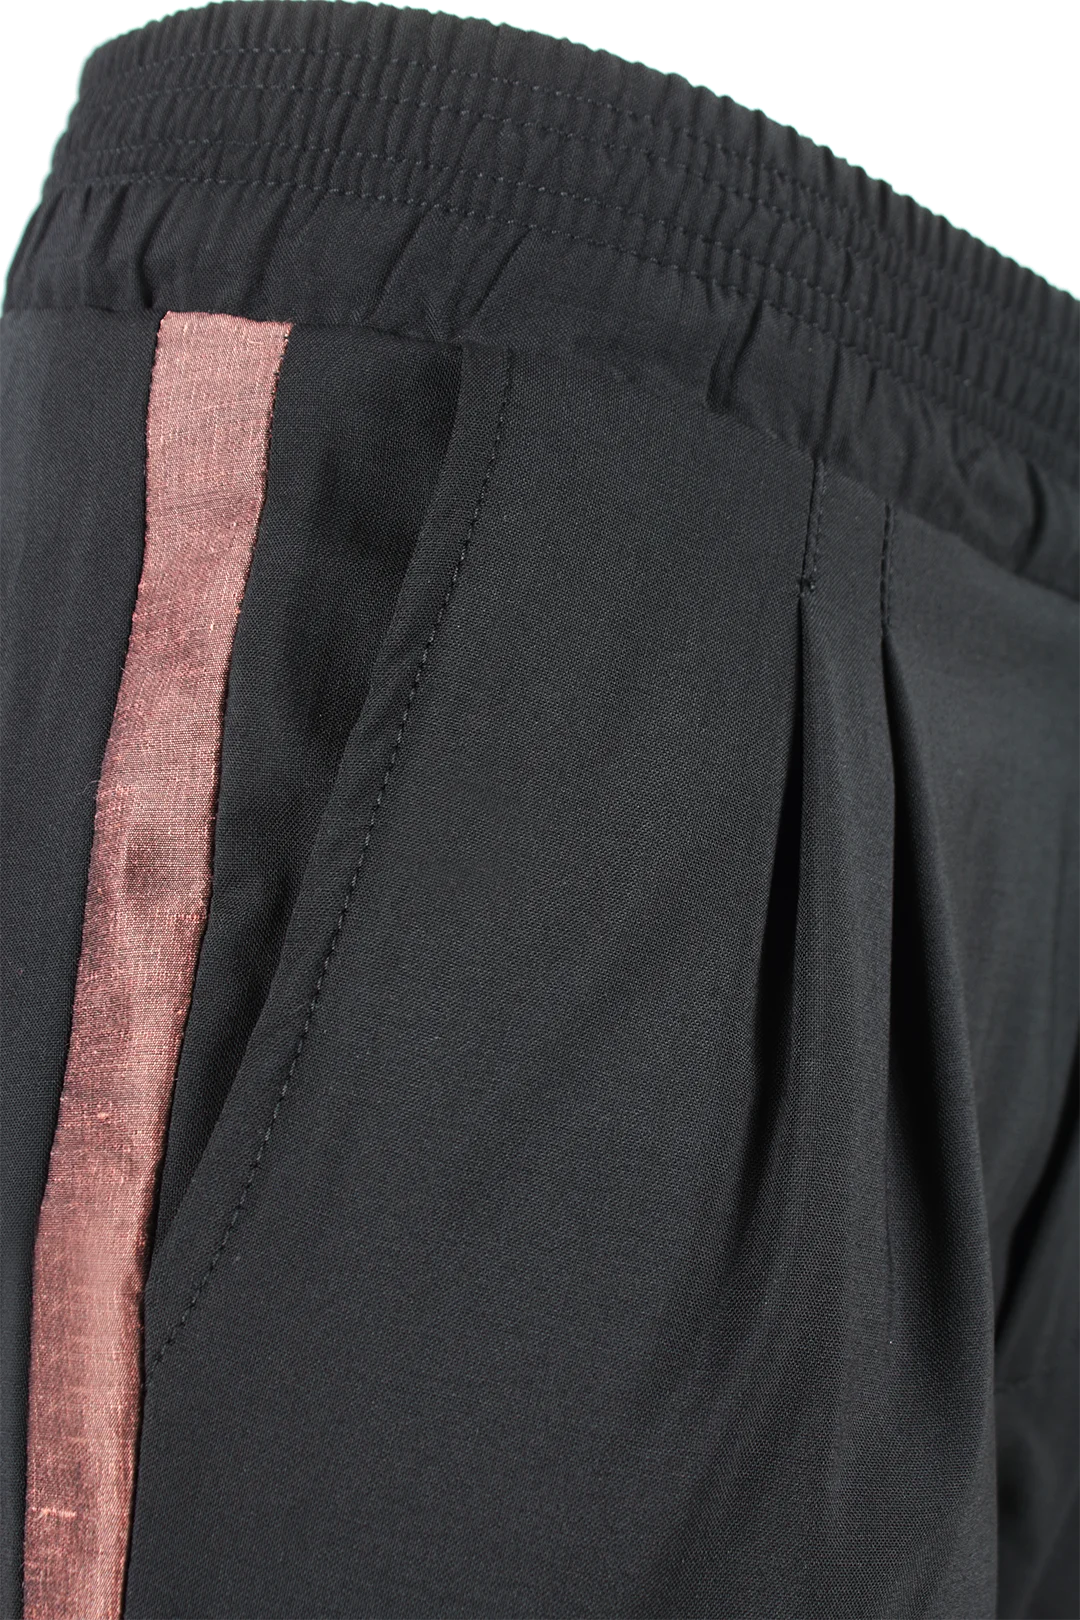 Pantalone lana nera banda laterale rame elastico